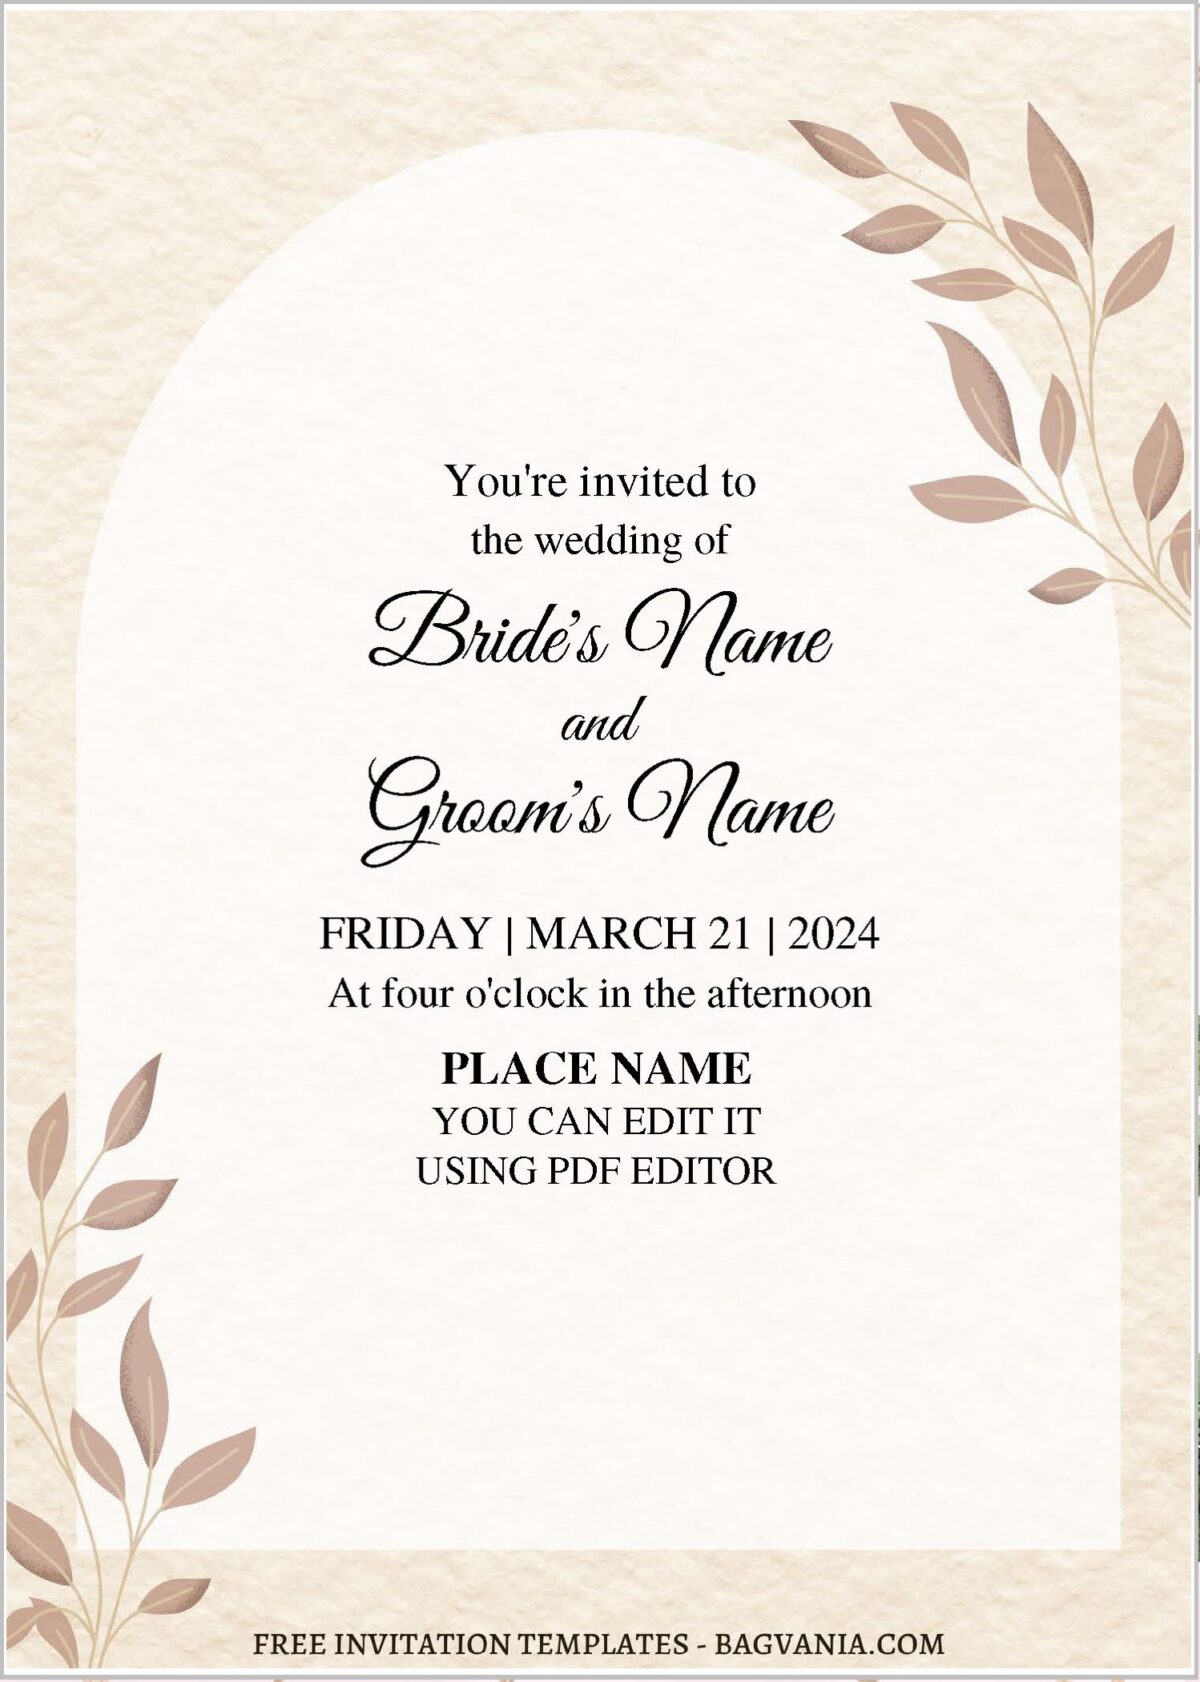 (Free Editable PDF) Vintage Rustic Greenery Wedding Invitation Templates with watercolor eucalyptus